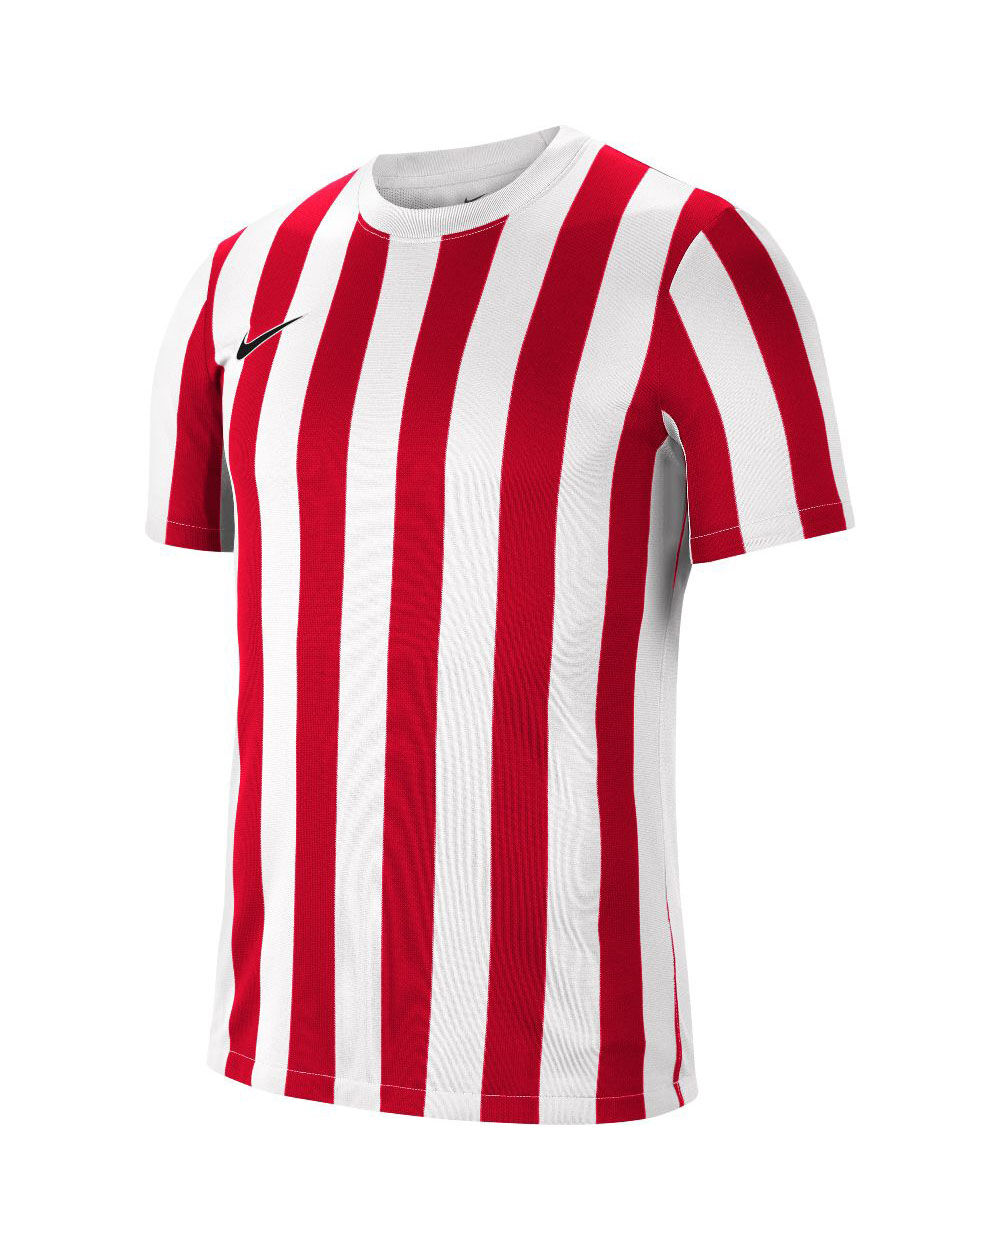 Camiseta Nike Striped Division IV Blanco y Rojo para Mujeres - CW3816-104